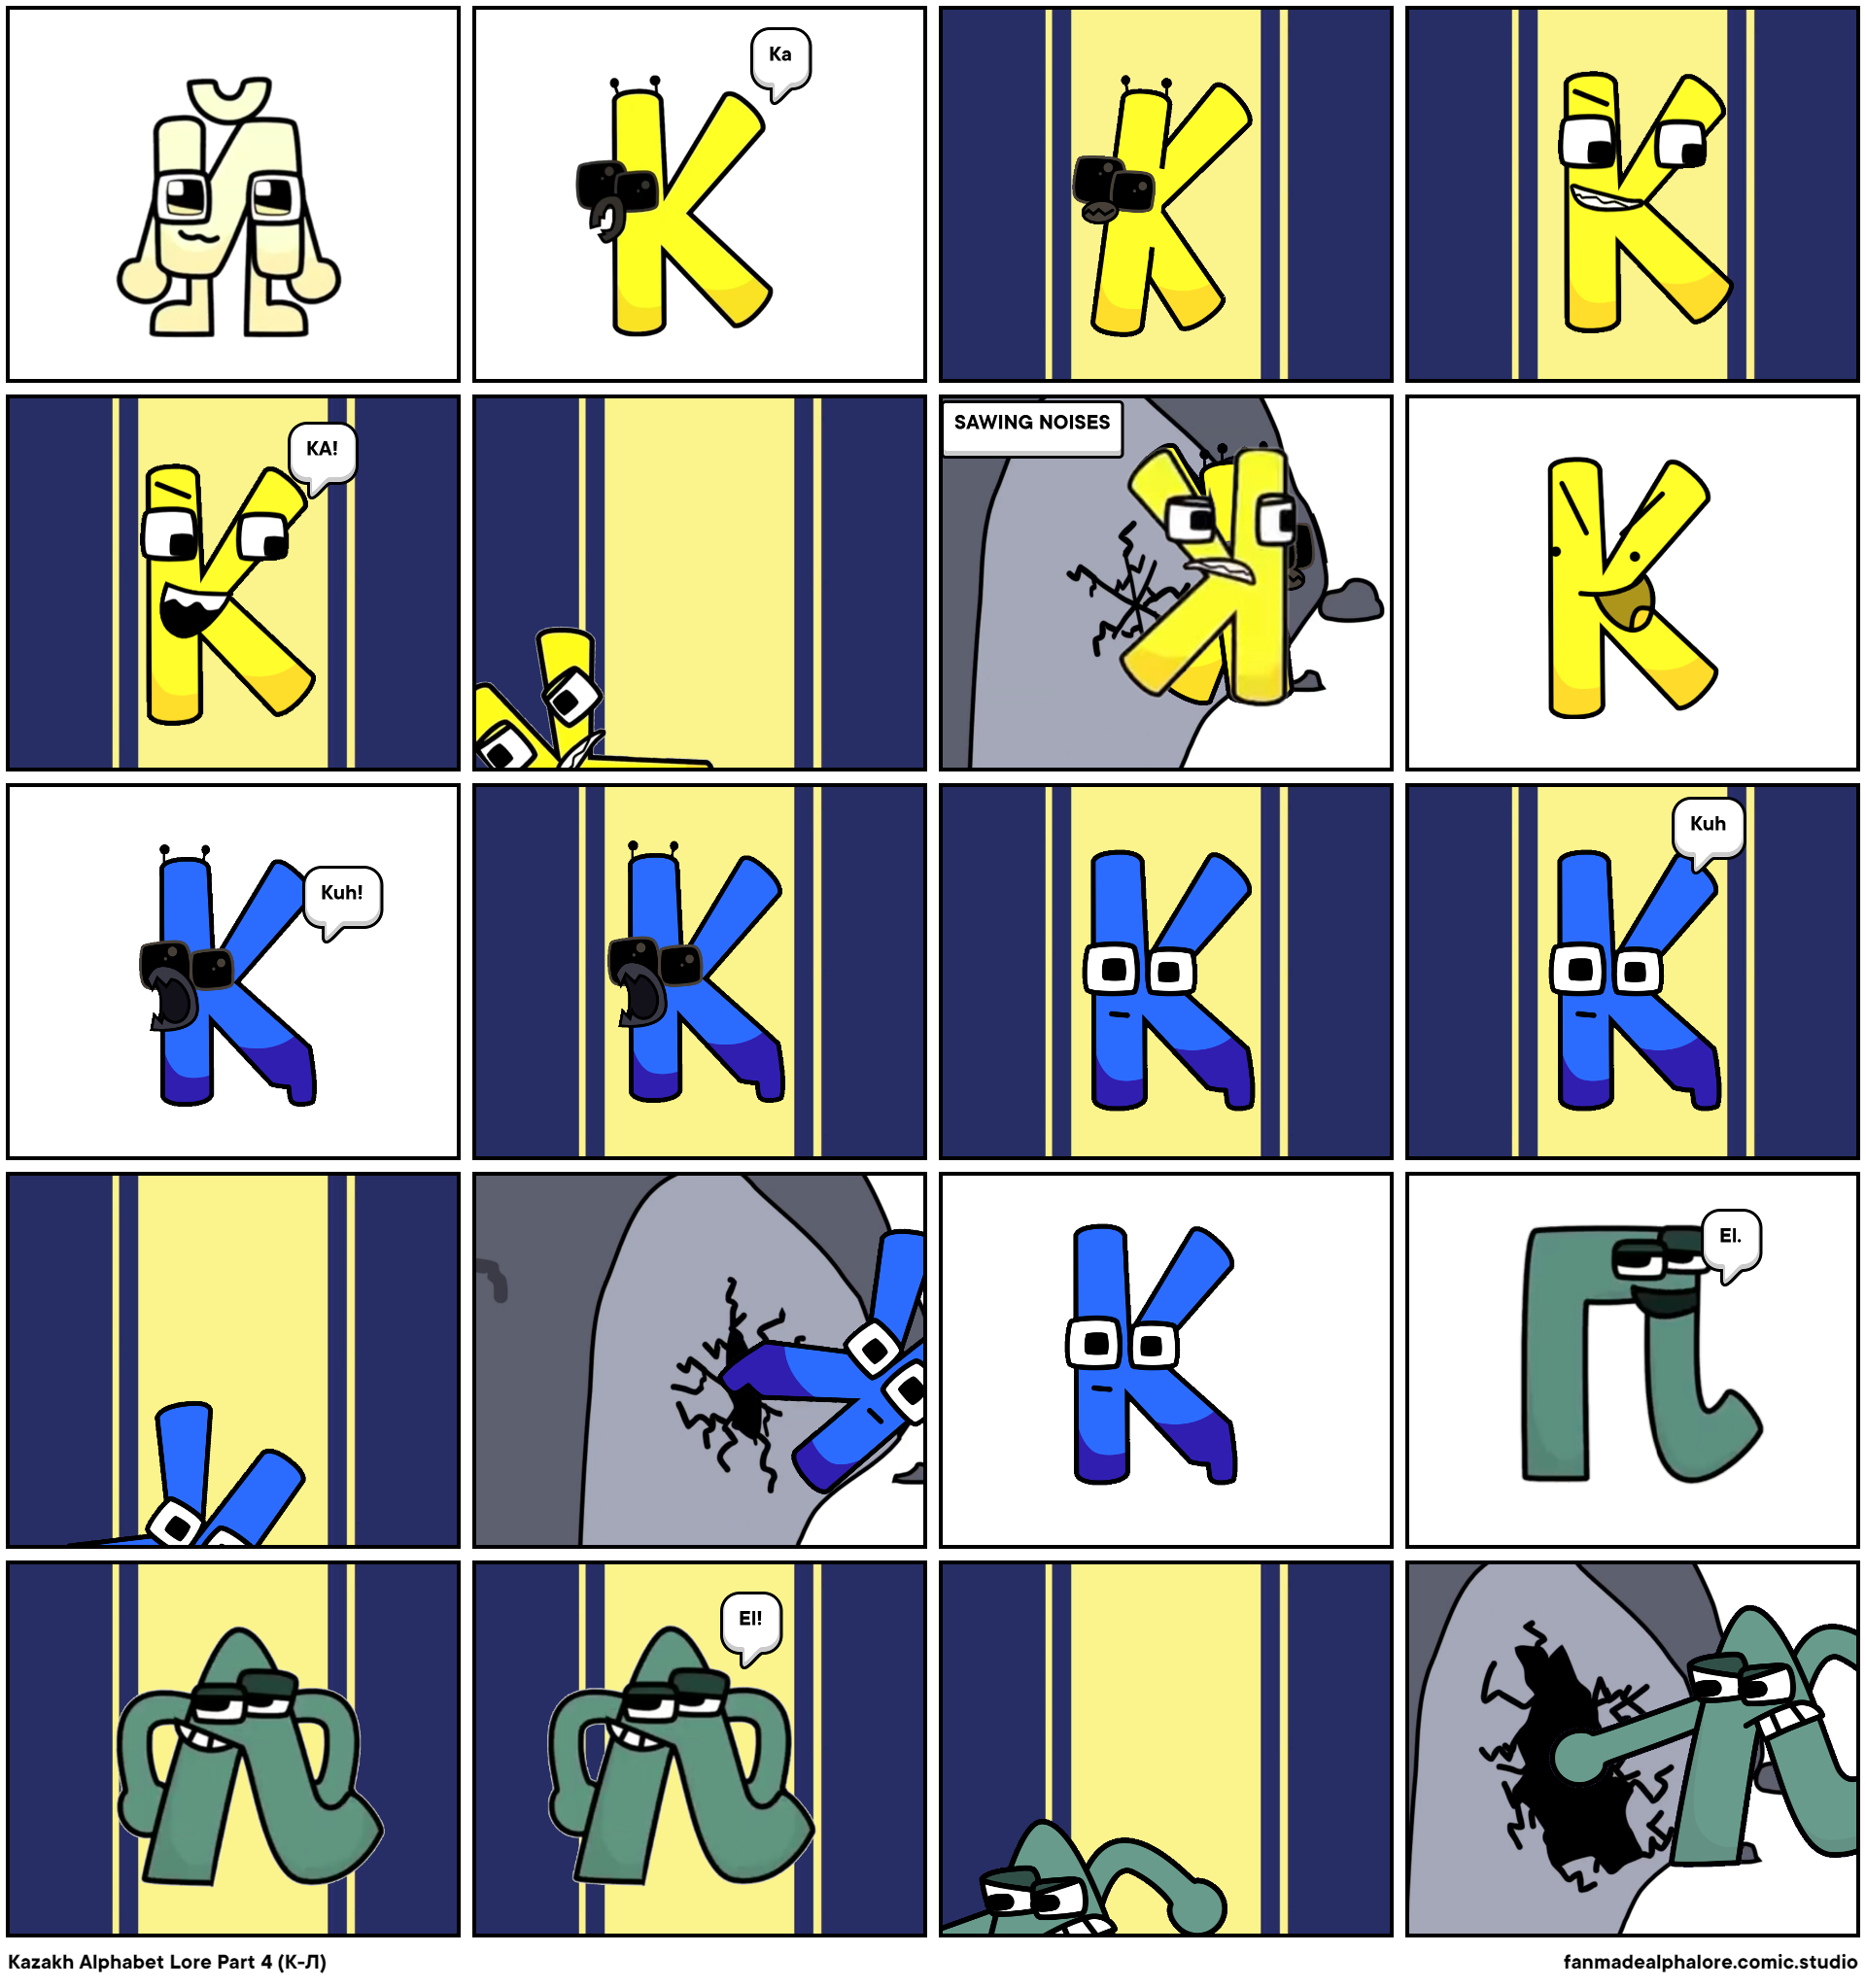 Kazakh Alphabet Lore Designs (Part 1) - Comic Studio